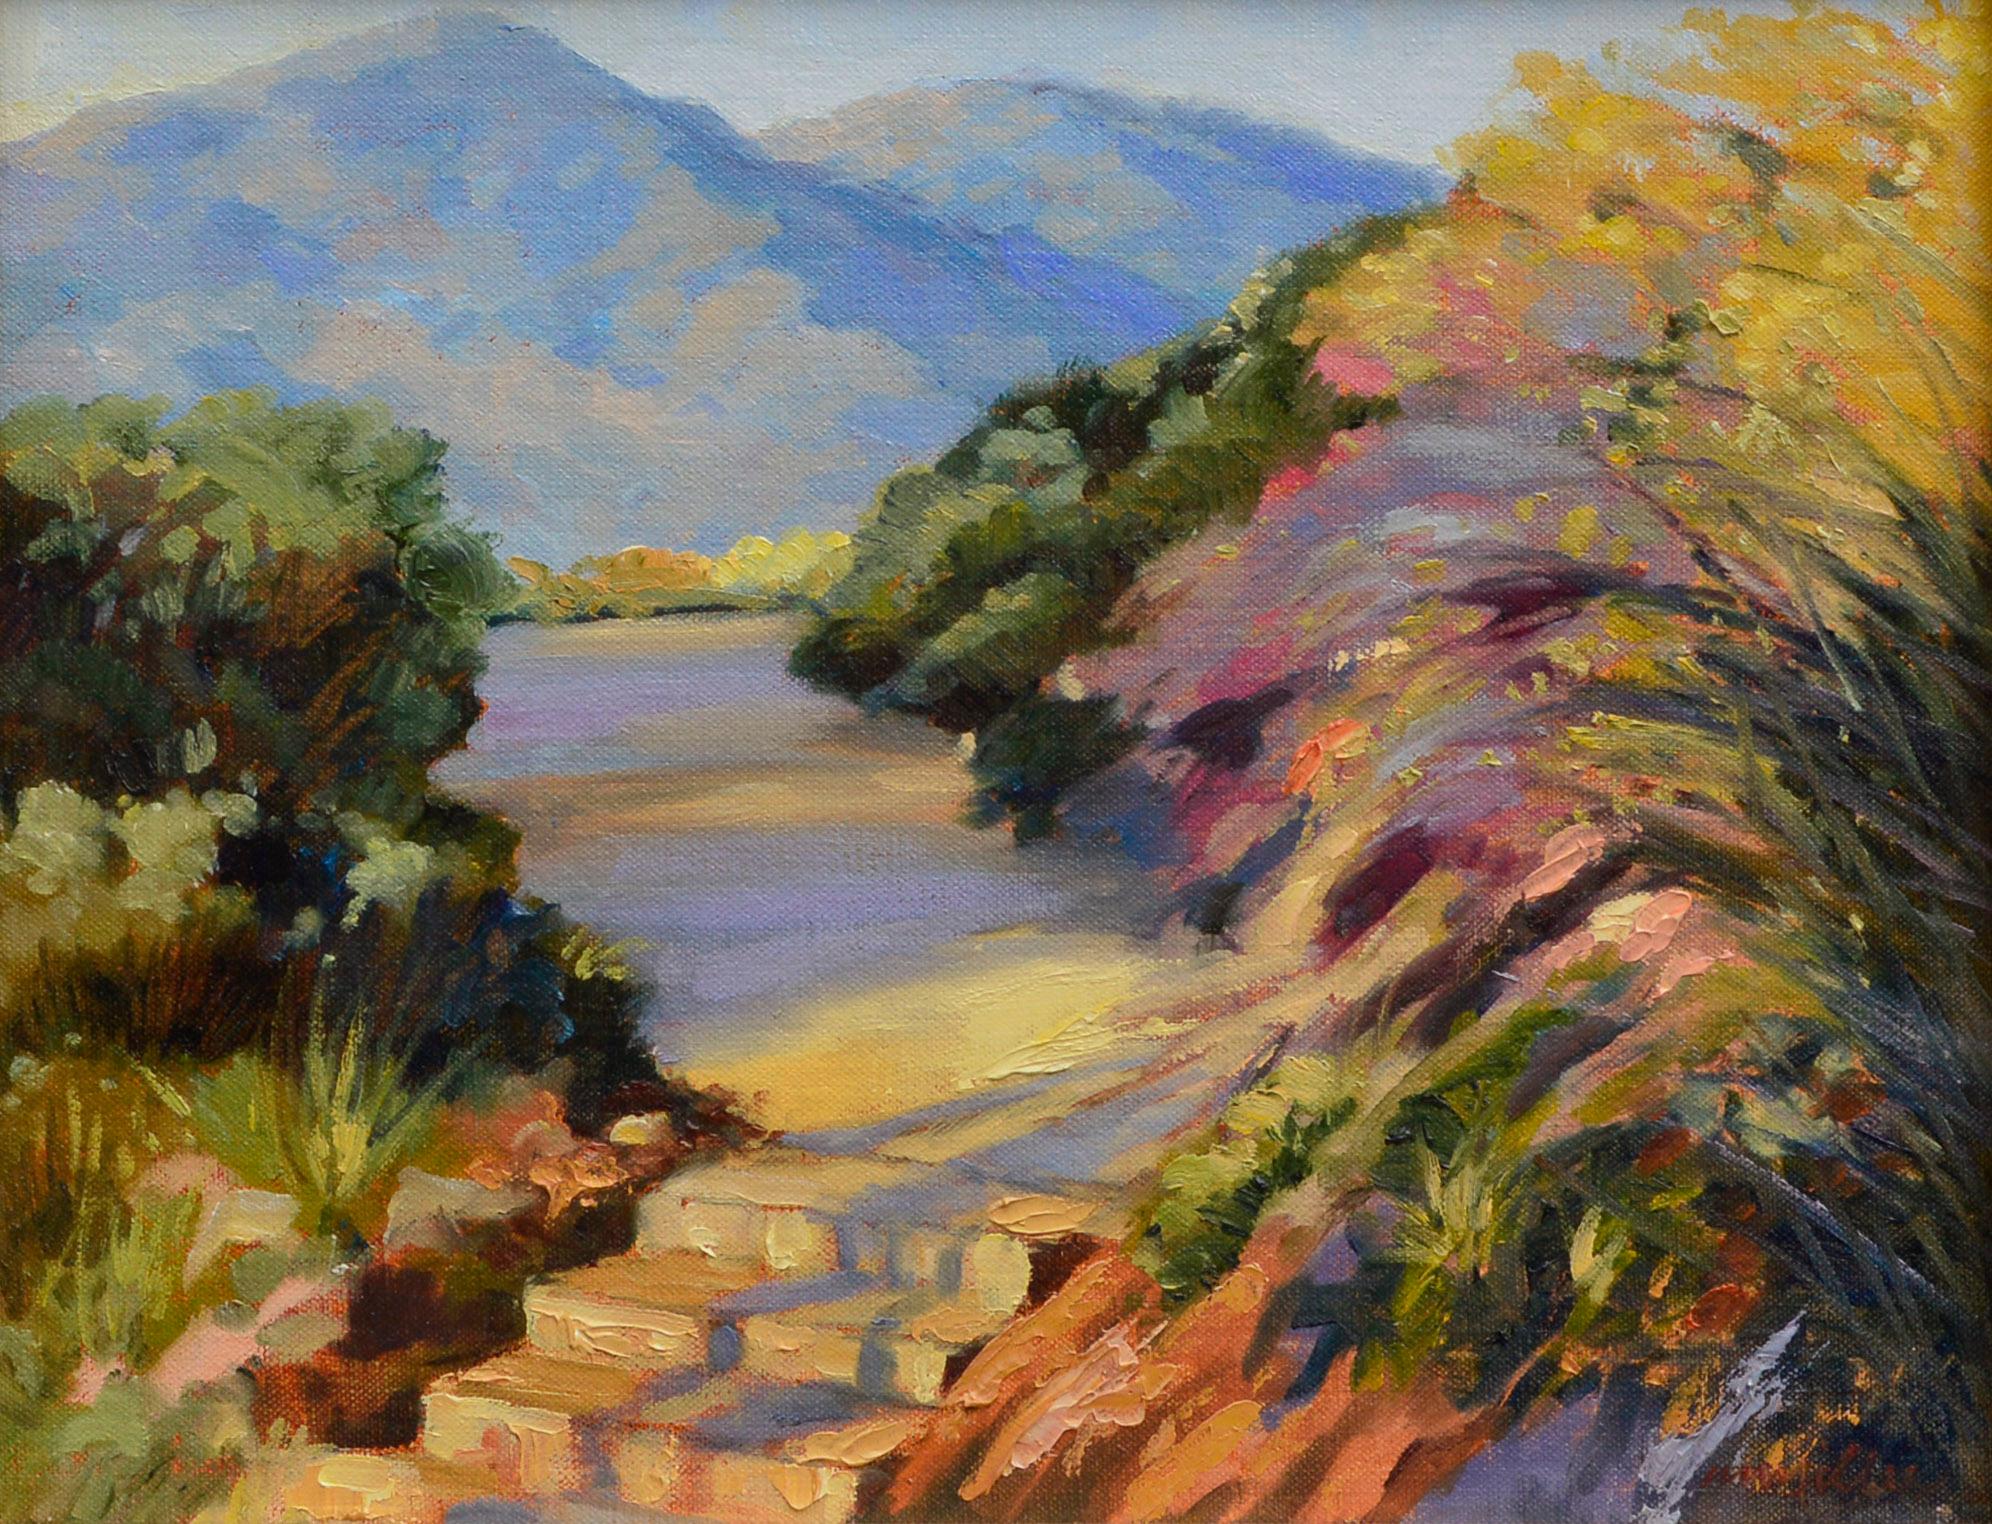 Mt Tamalpais and Bon Tempe Lake California Landscape - Painting by Maralyn Miller